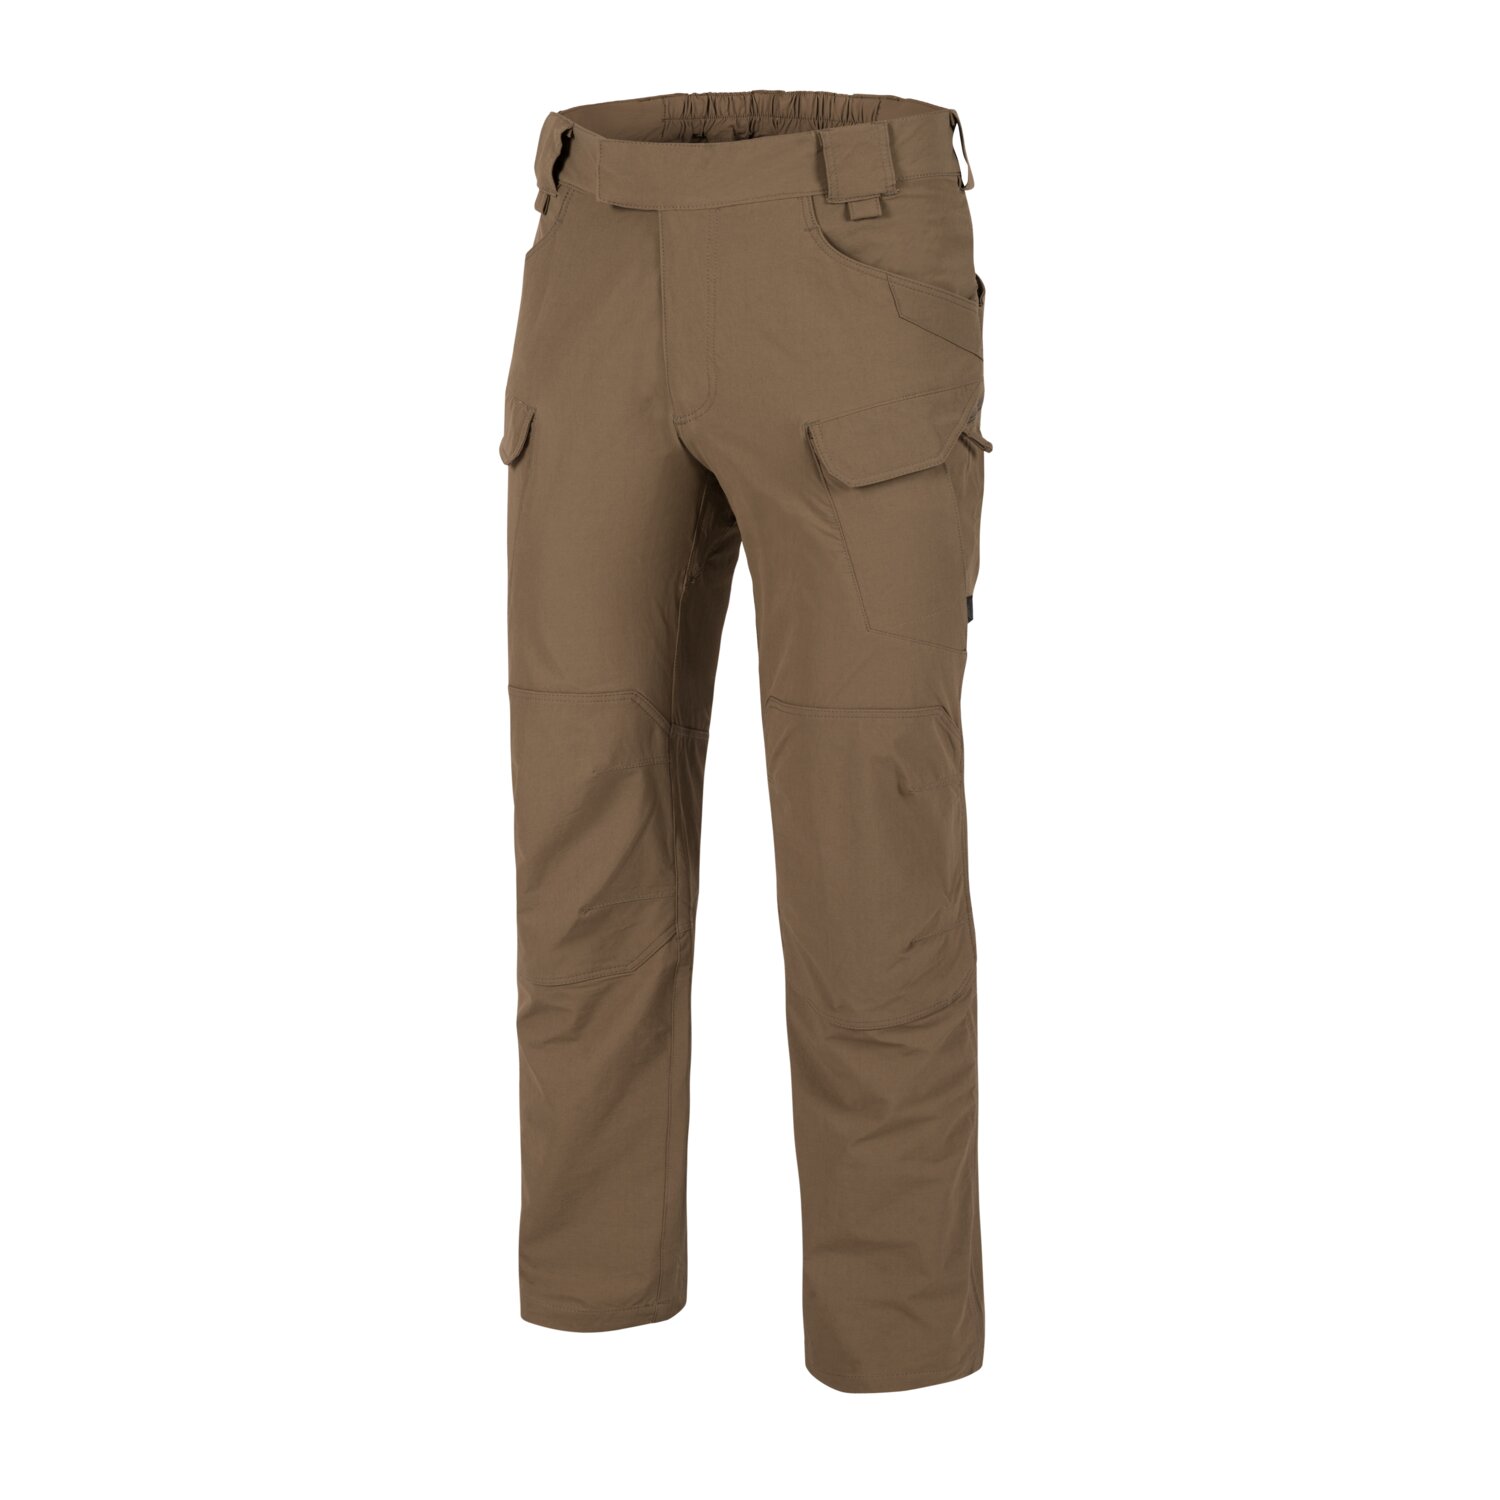 Kalhoty Helikon OTP (Outdoor Tactical Pants)® - VersaStretch®